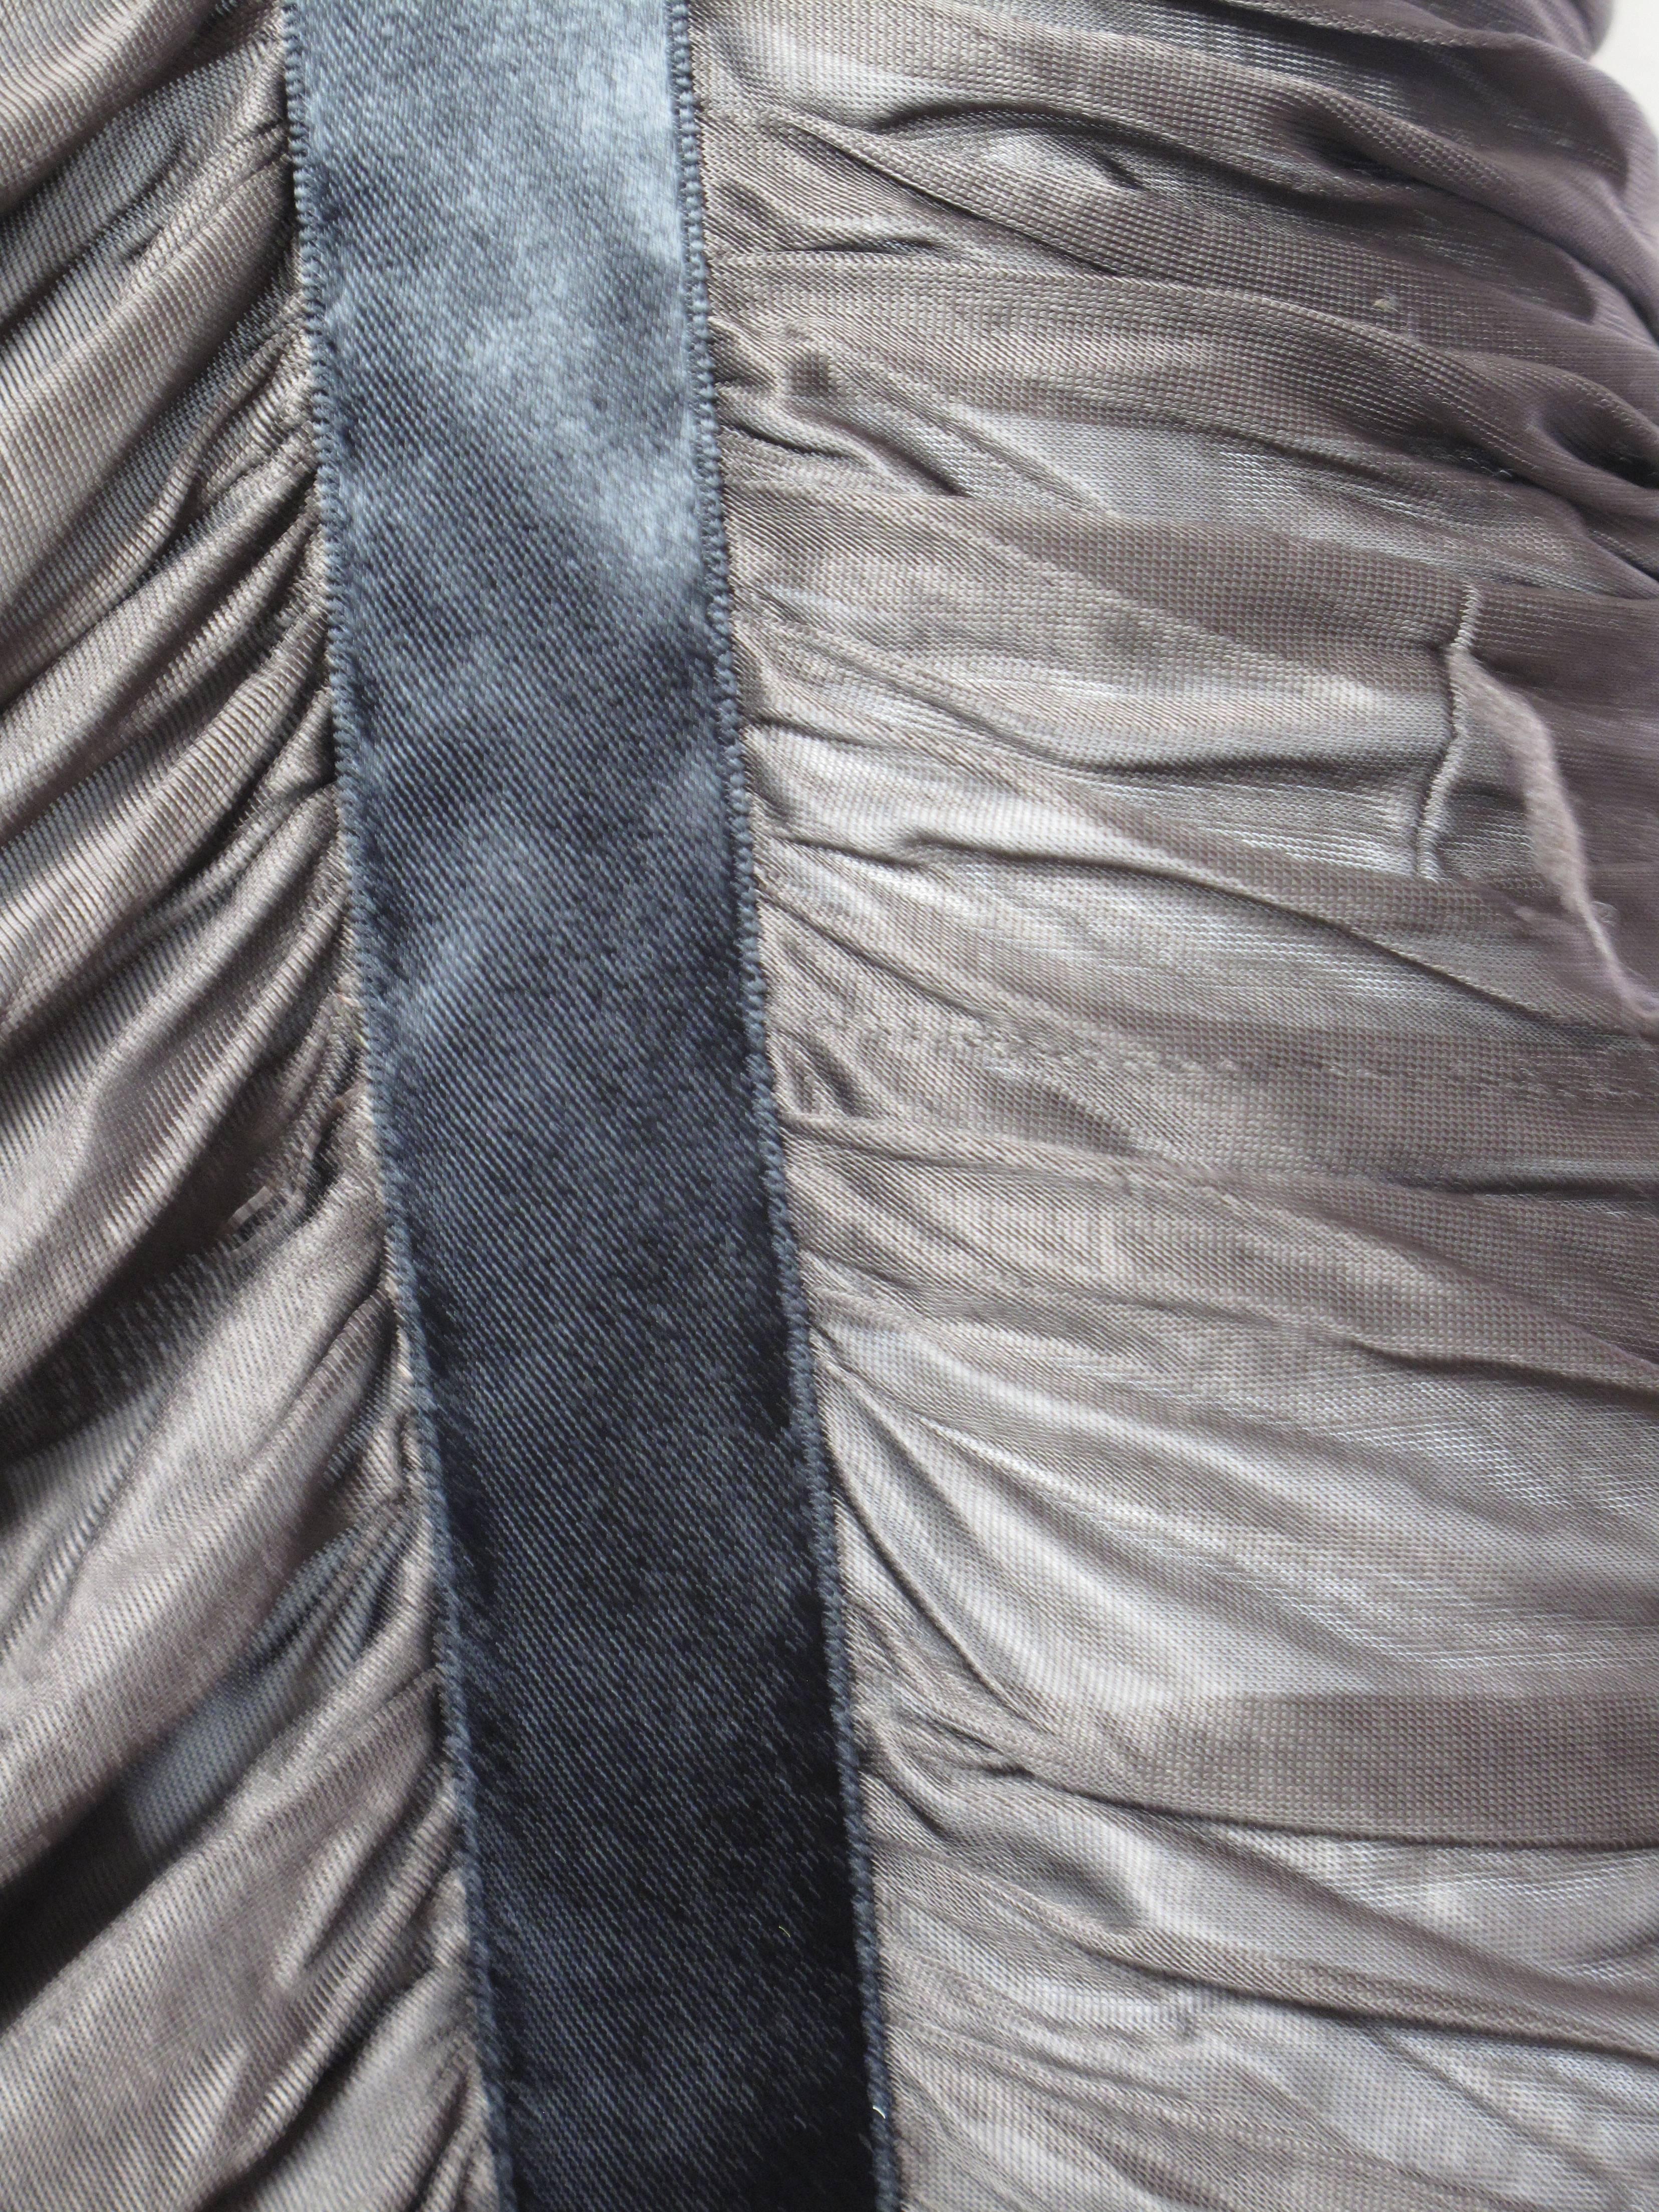 Black Yves Saint Laurent by Tom Ford ribbon dress - sale